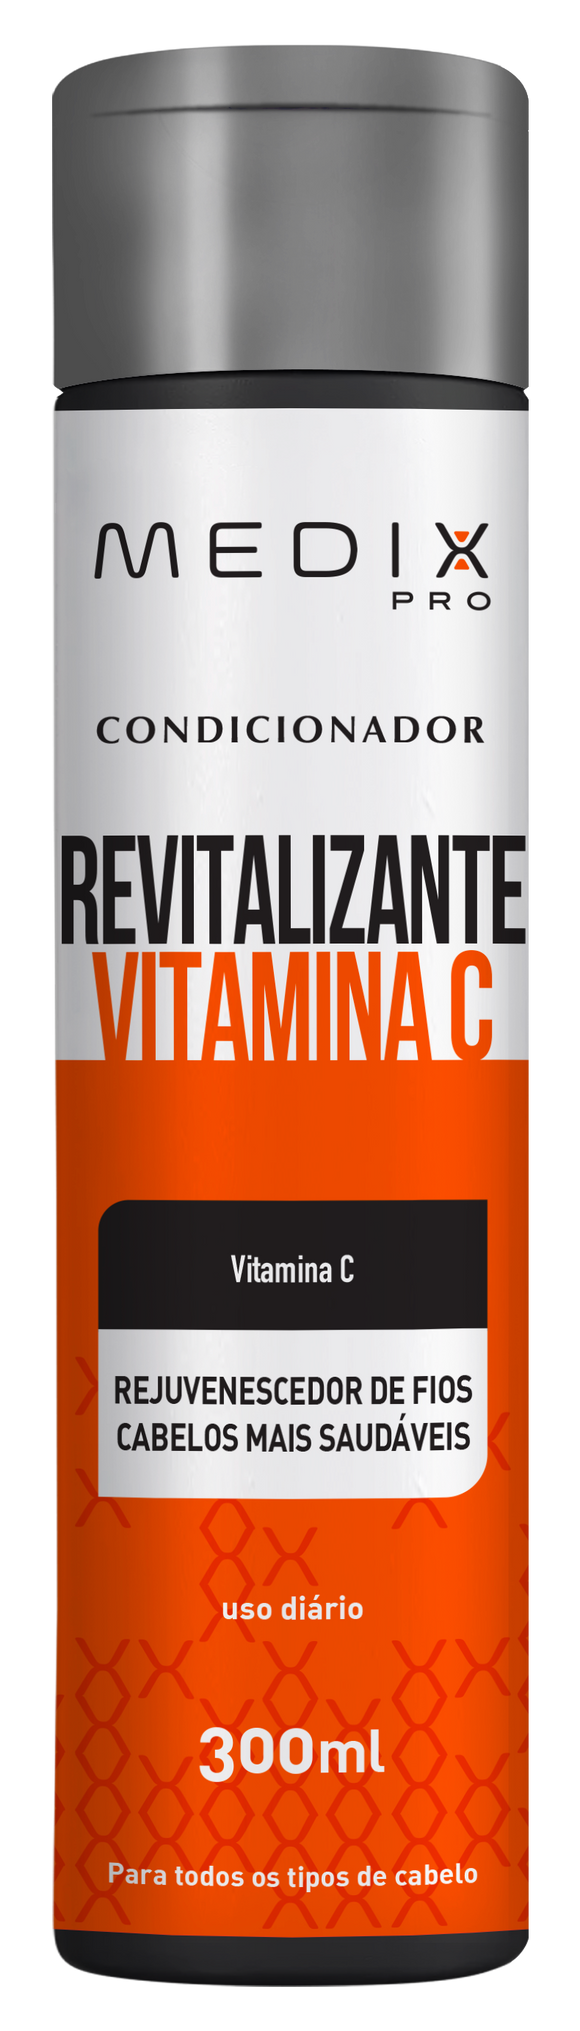 Condicionador Revitalização Vitamina C Medix